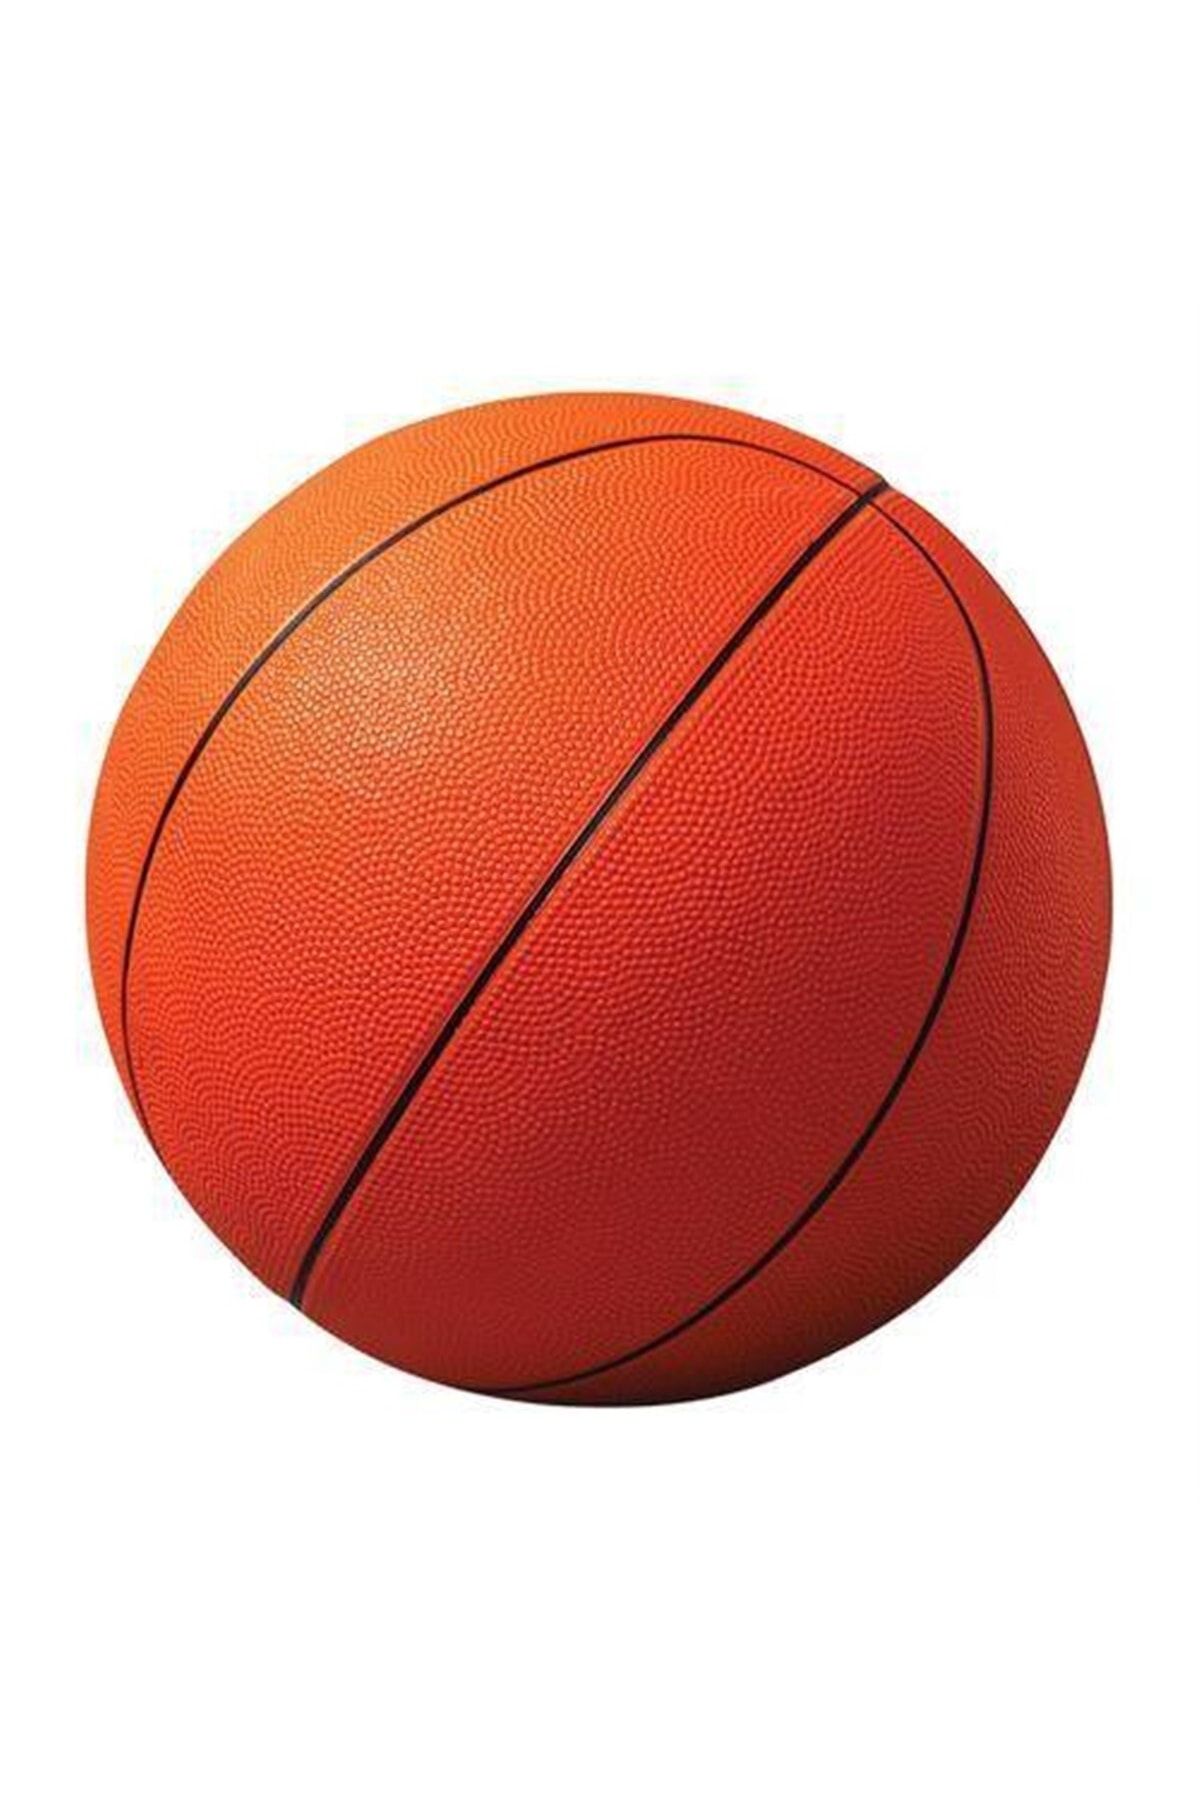 YFHOME 2 Adet Kauçuk Basketbol Topu Profesyonel Boy